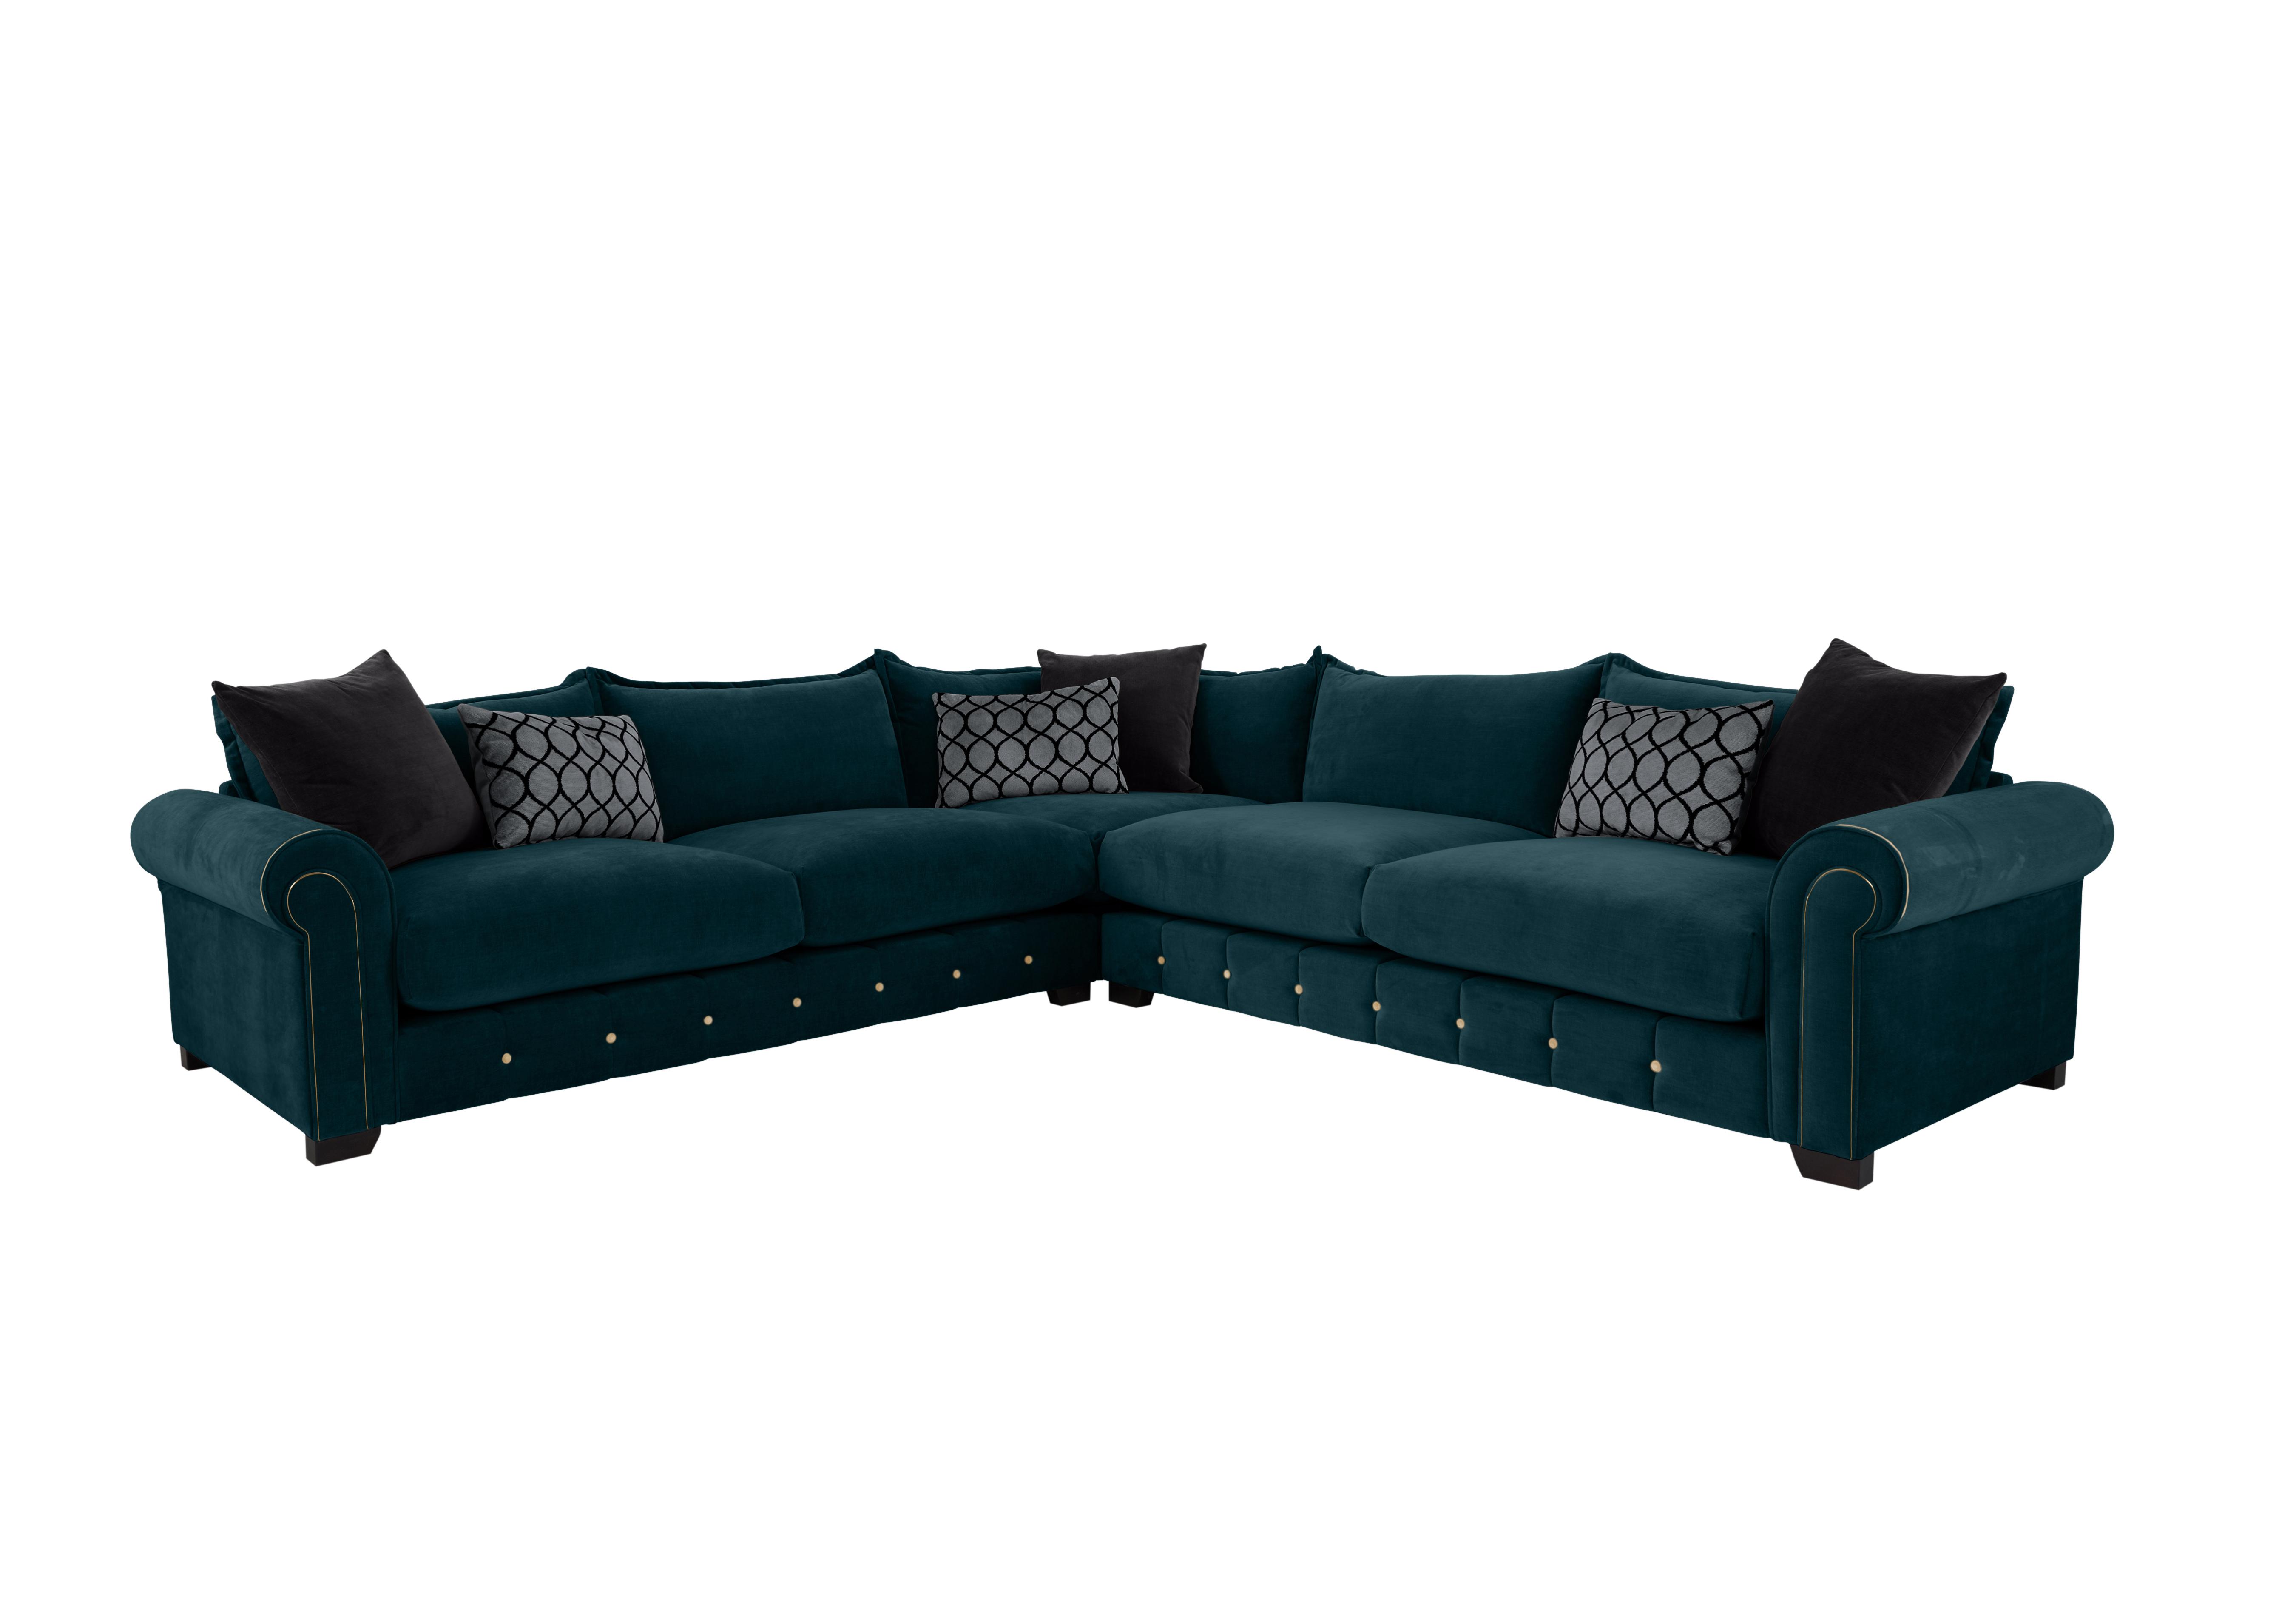 Sumptuous Large Fabric Corner Sofa in Chamonix Teal Dk/Gold on Furniture Village